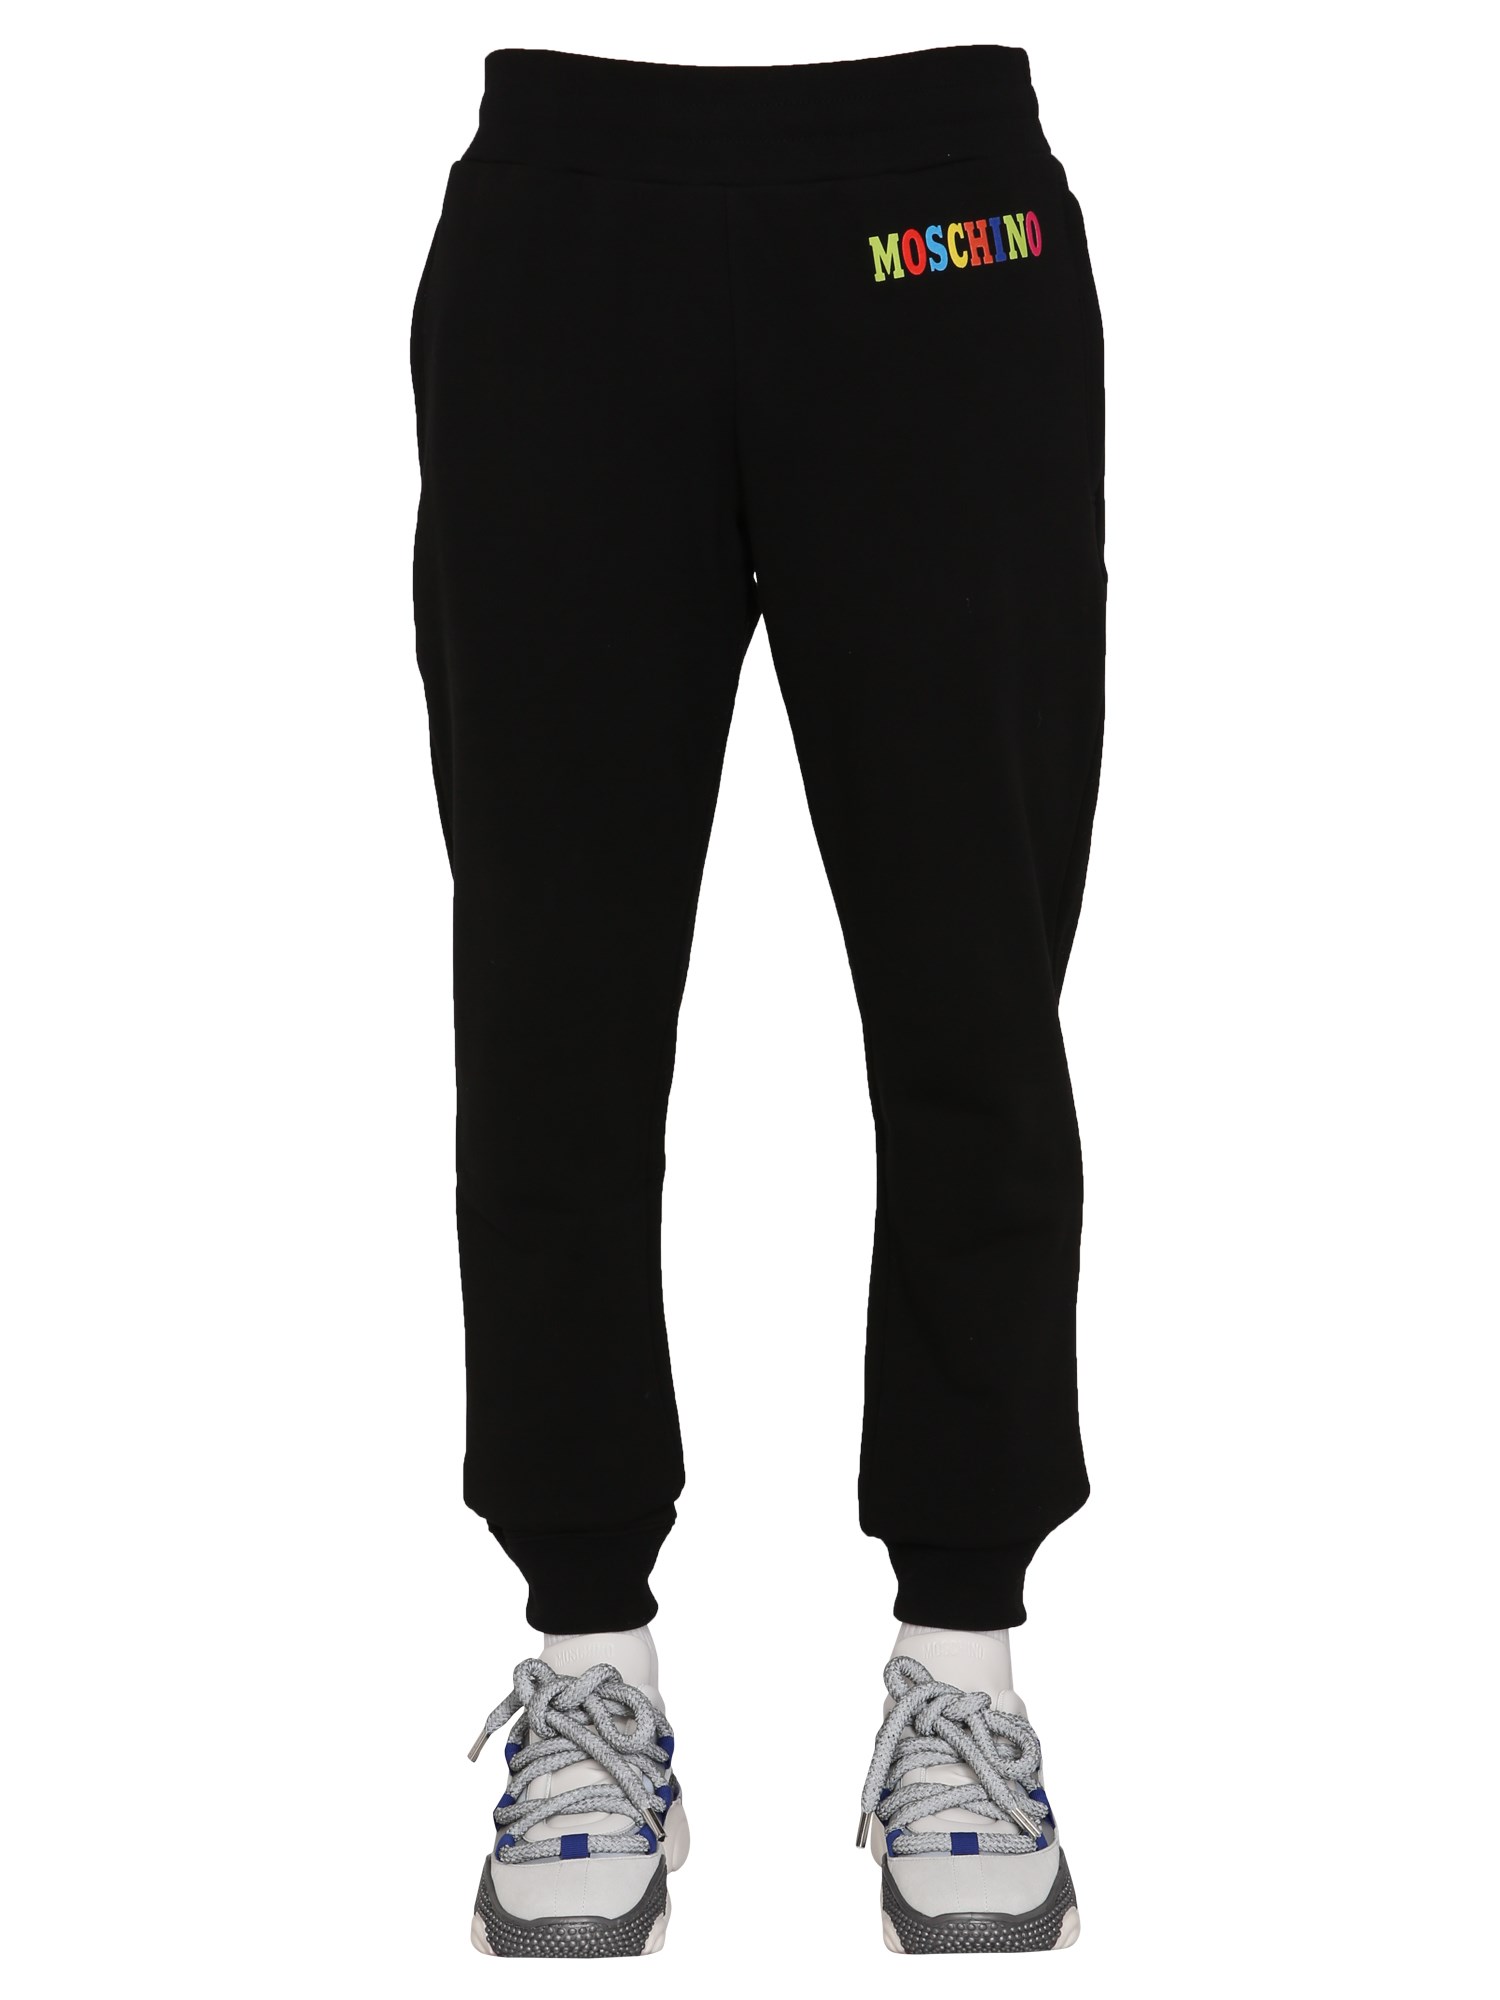 moschino multicolor logo jogging pants